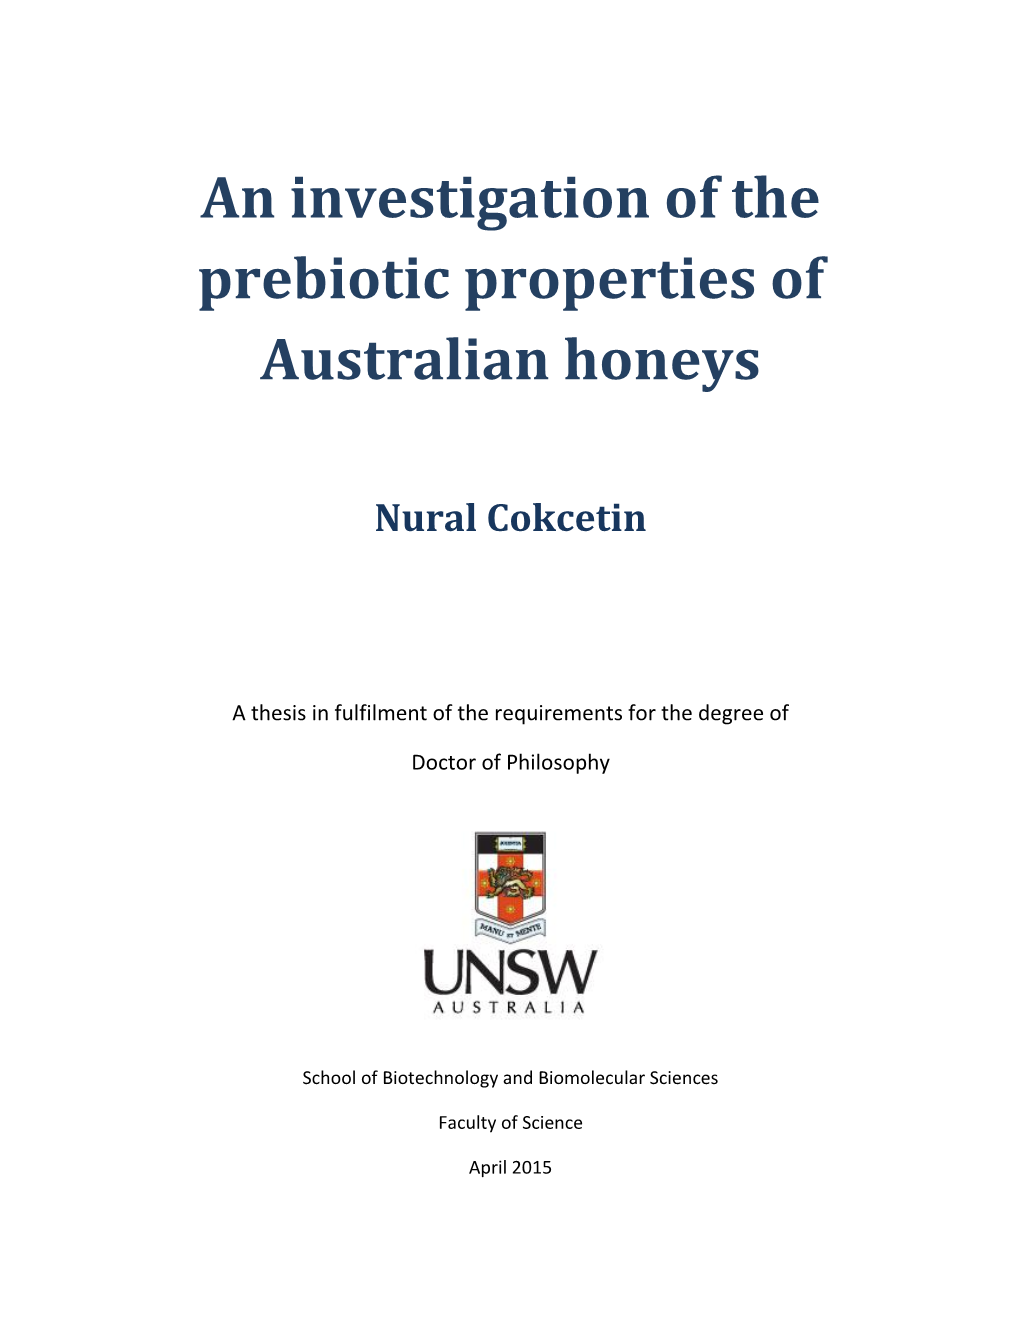 An Investigation of the Prebiotic Properties of Australian Honeys